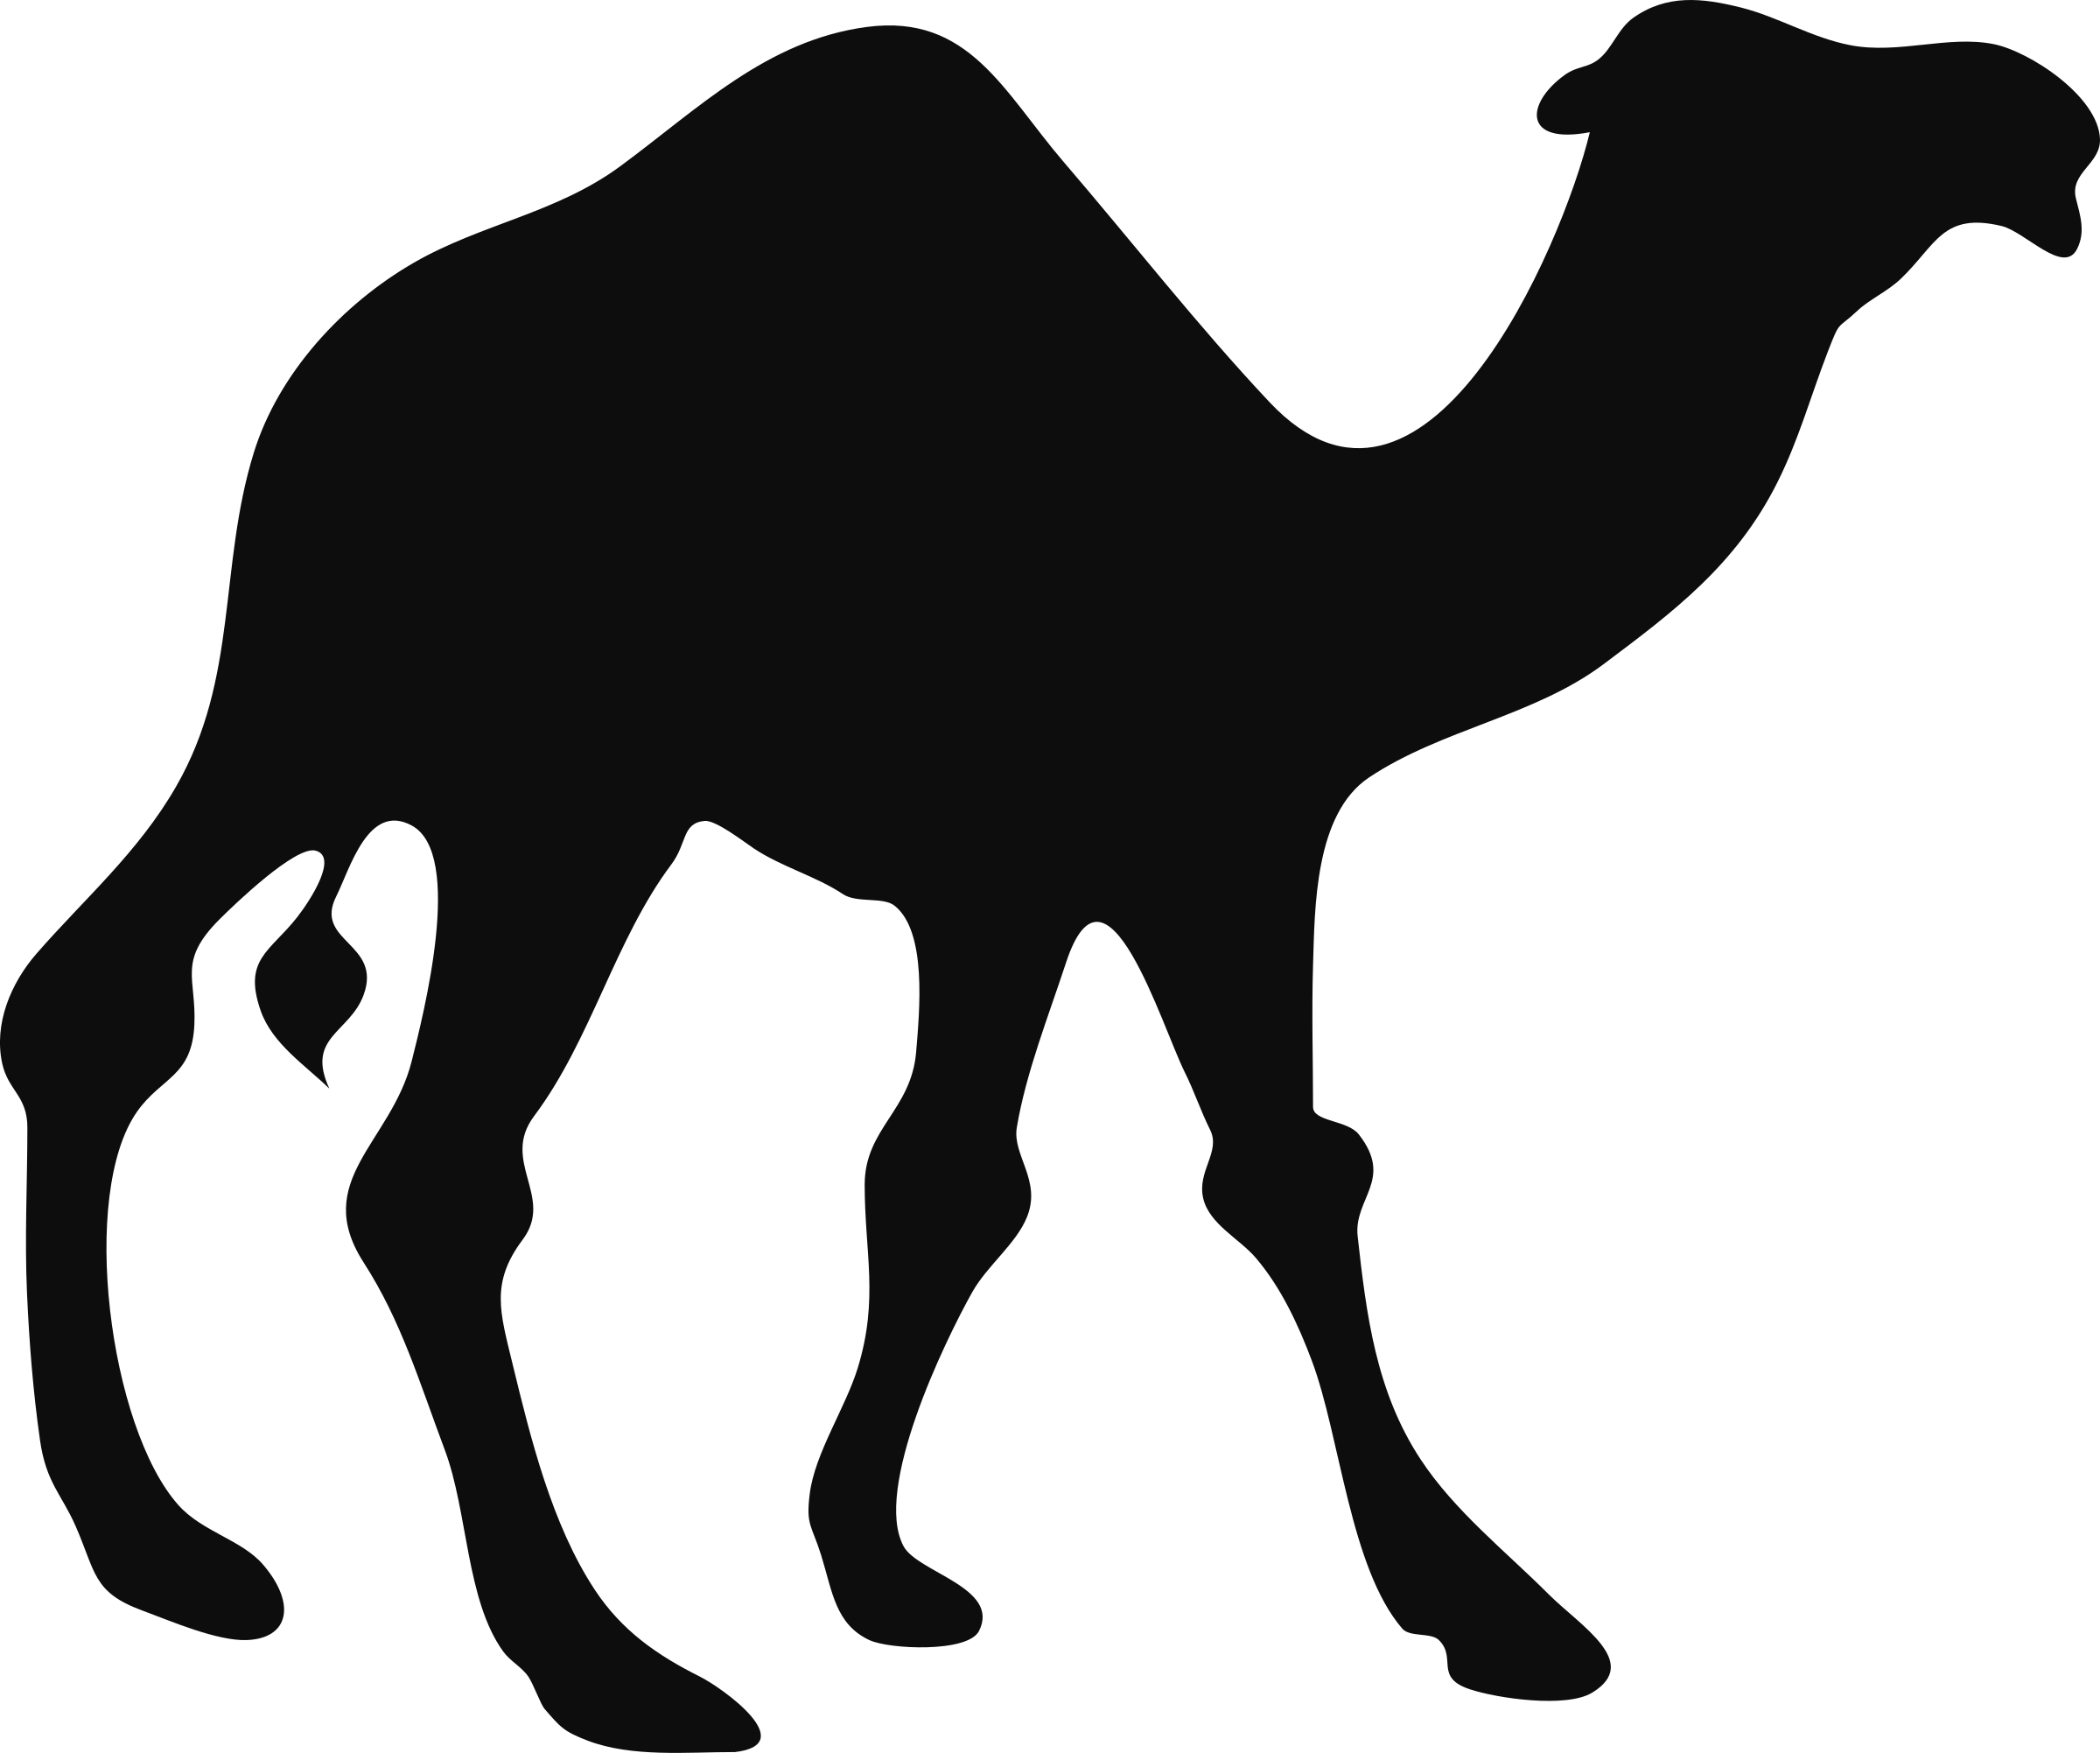 Camel silhouette vector.